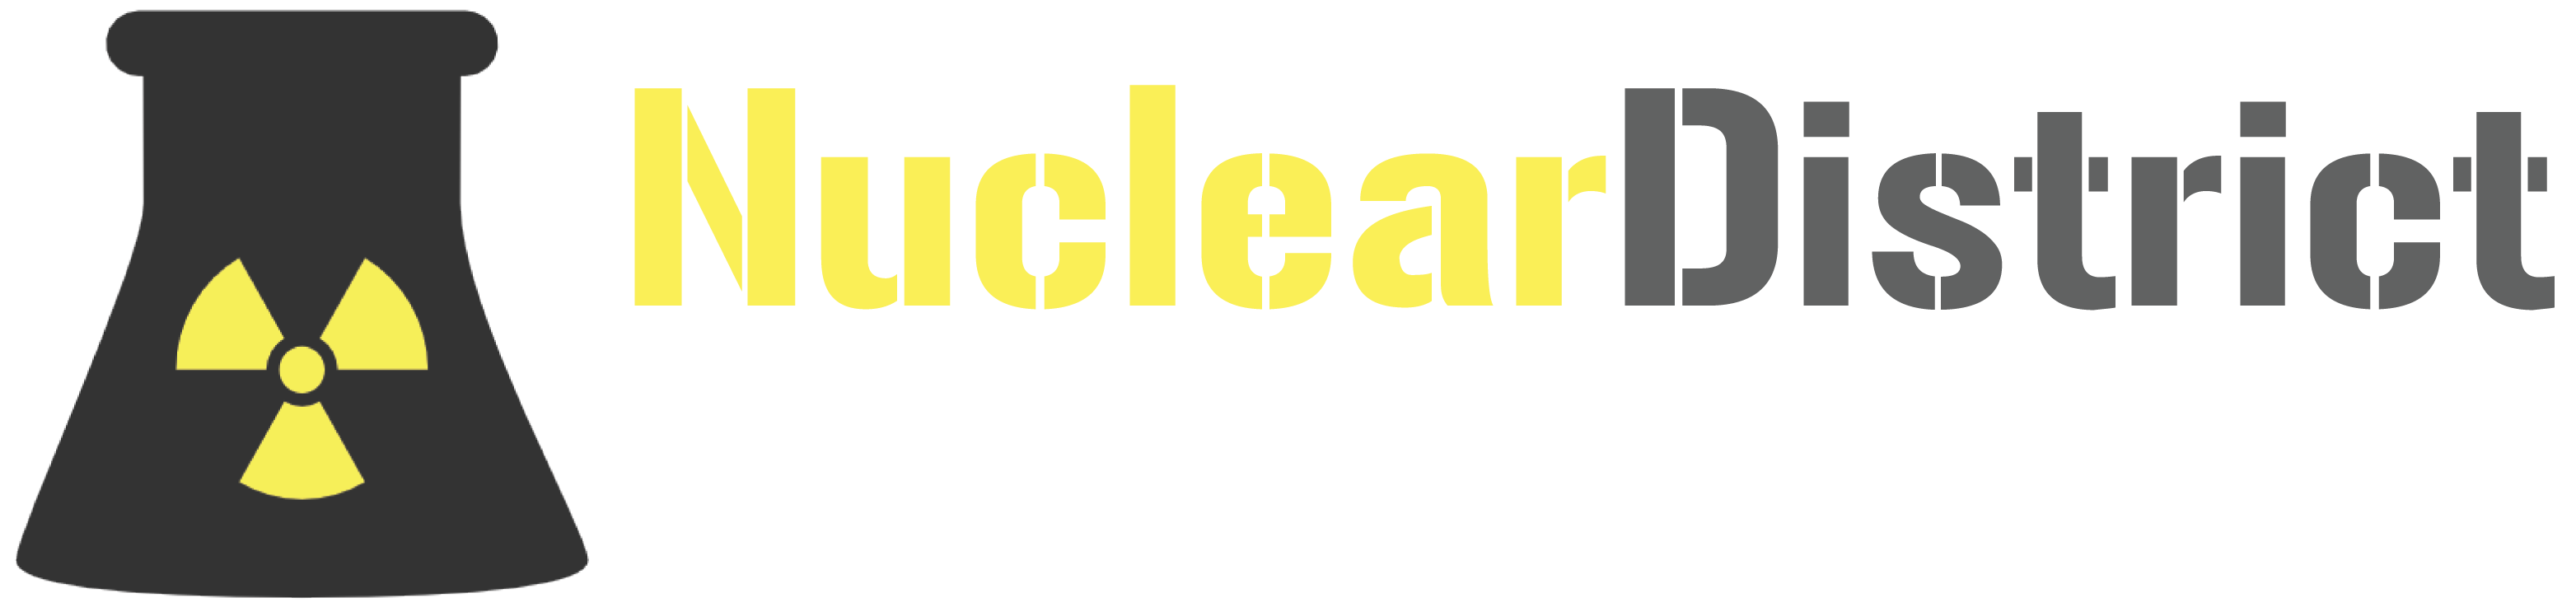 NuclearDistrict's Logo Title